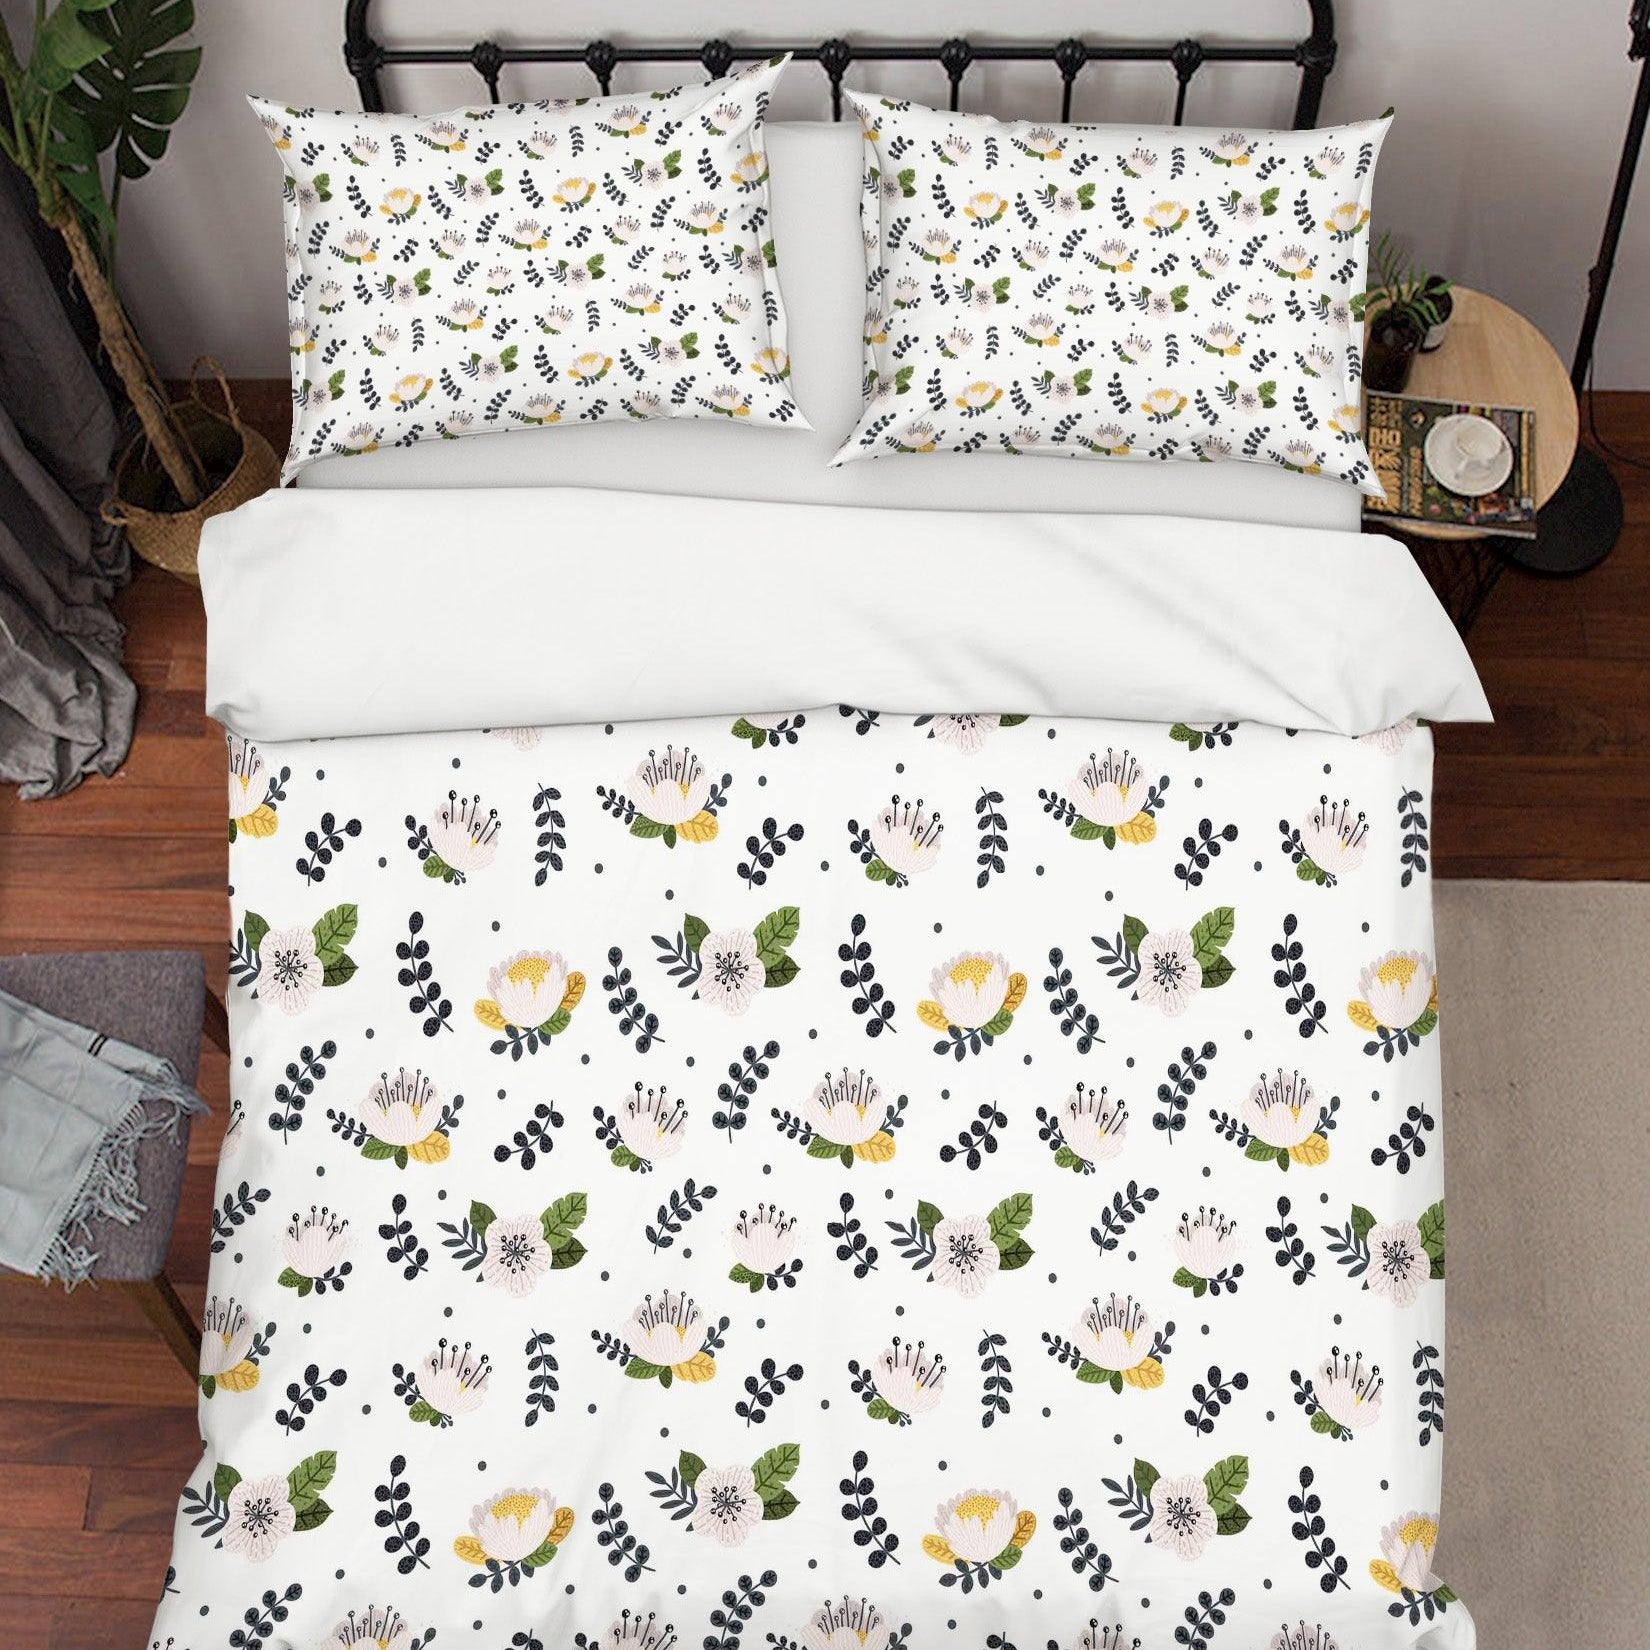 3D White Floral Leaves Quilt Cover Set Bedding Set Duvet Cover Pillowcases SF111- Jess Art Decoration